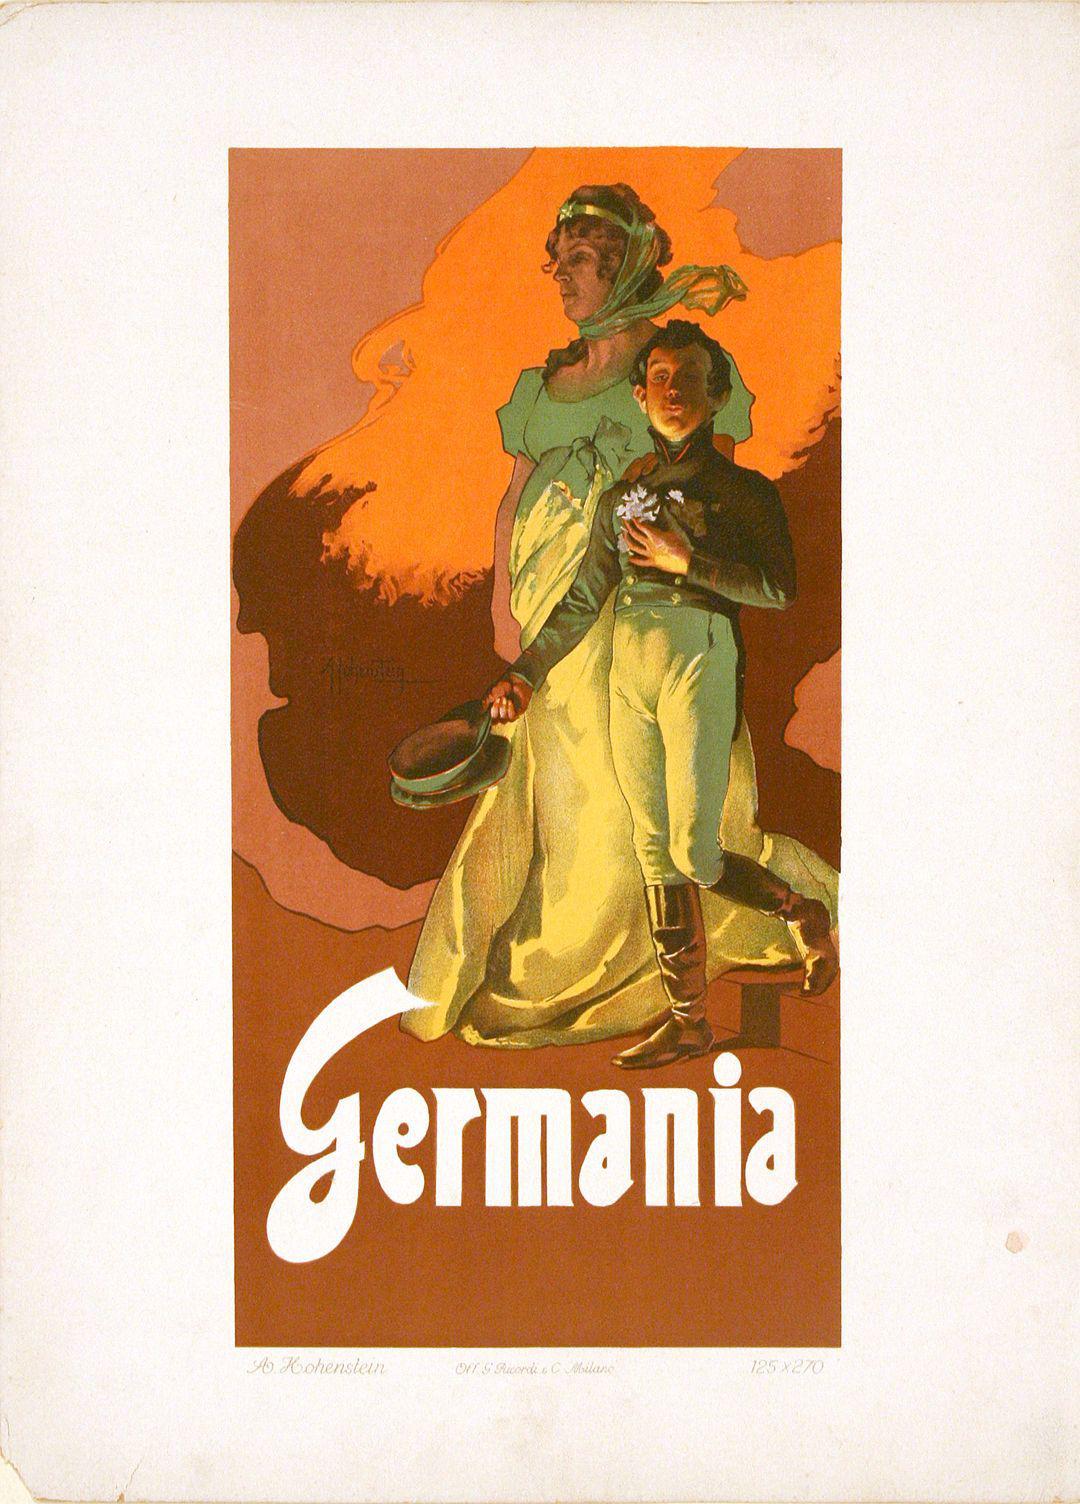 Original Poster of Germania by Adolfo Hohenstein by Ricordi 1914